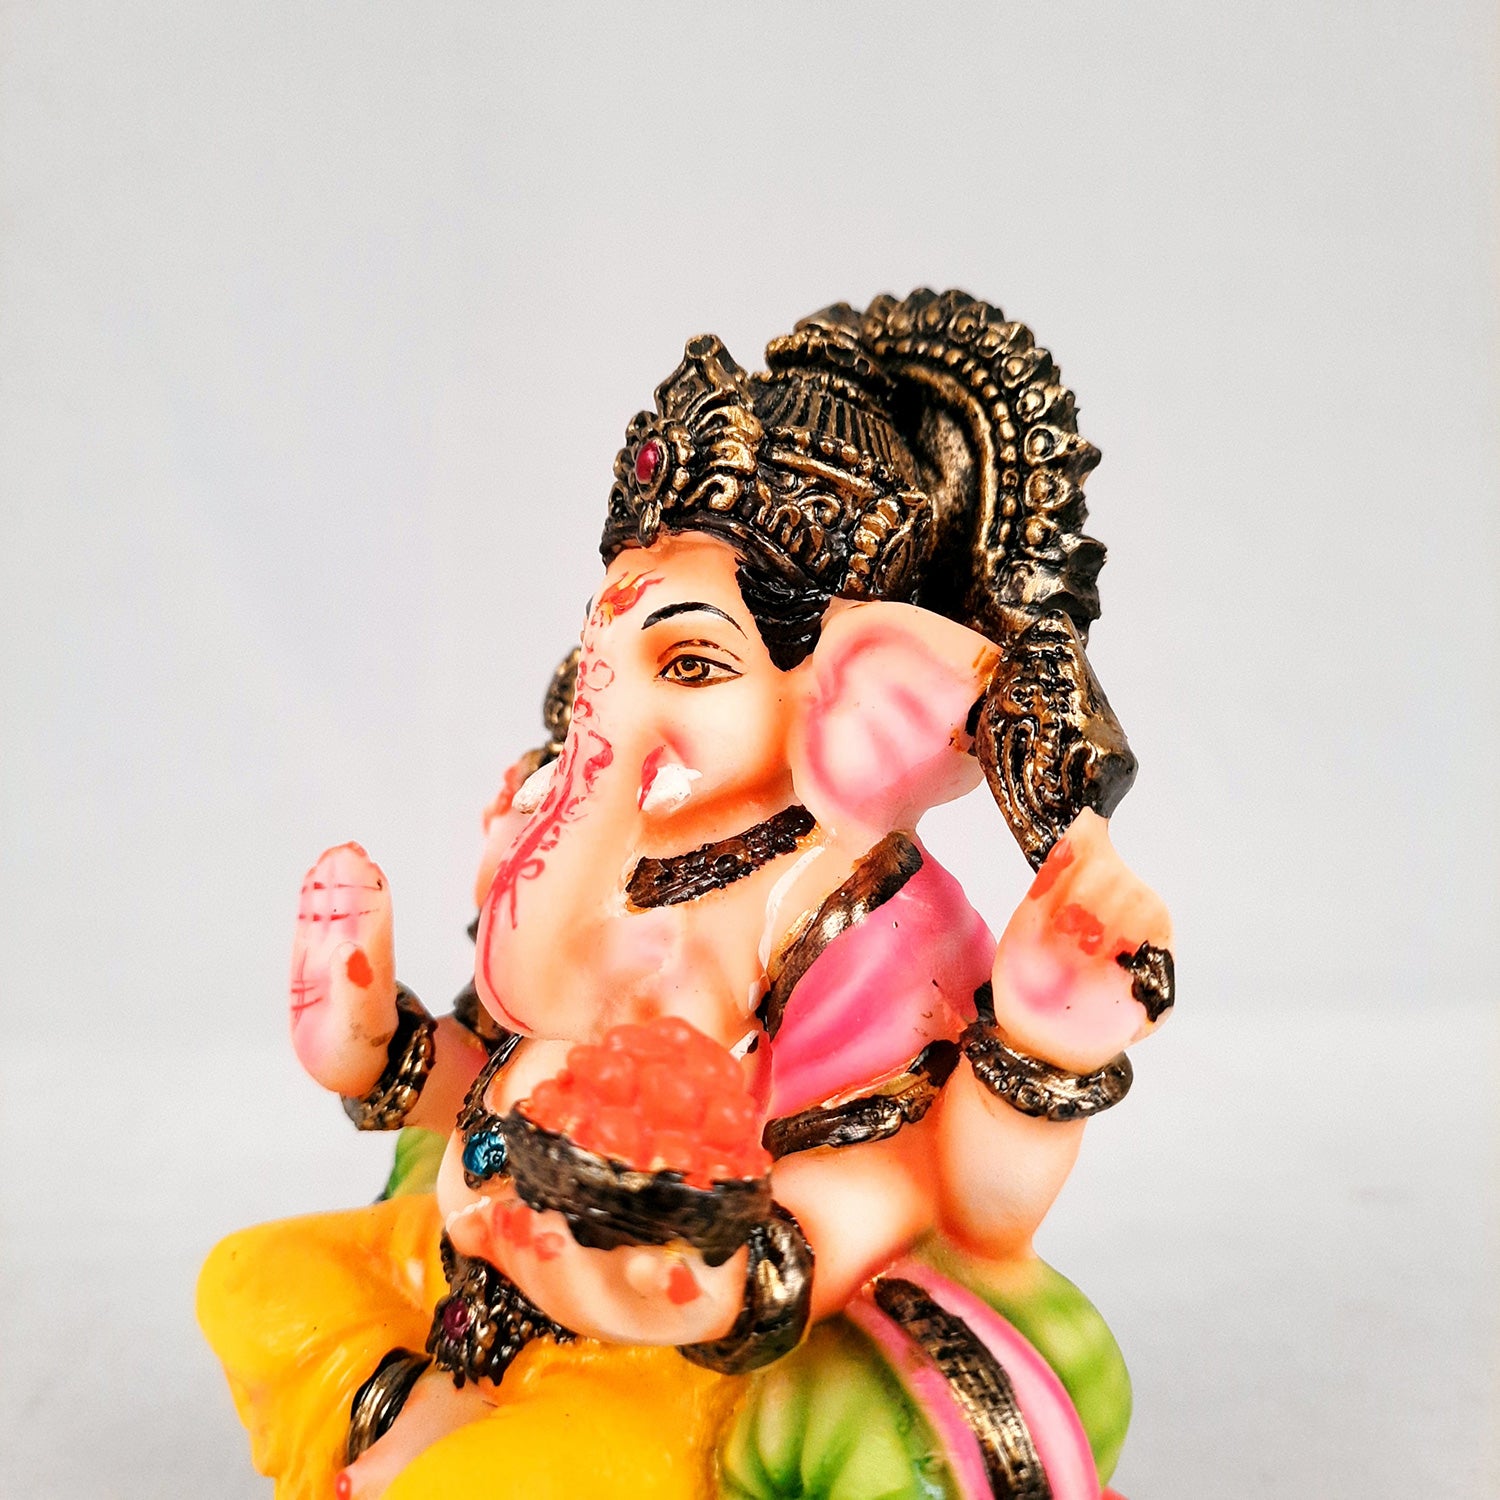 Ganesh Idol | Ganesha Statue - for Puja, Home & Table Decor | Housewarming, Diwali & Festival Gift - 6 Inch - apkamart